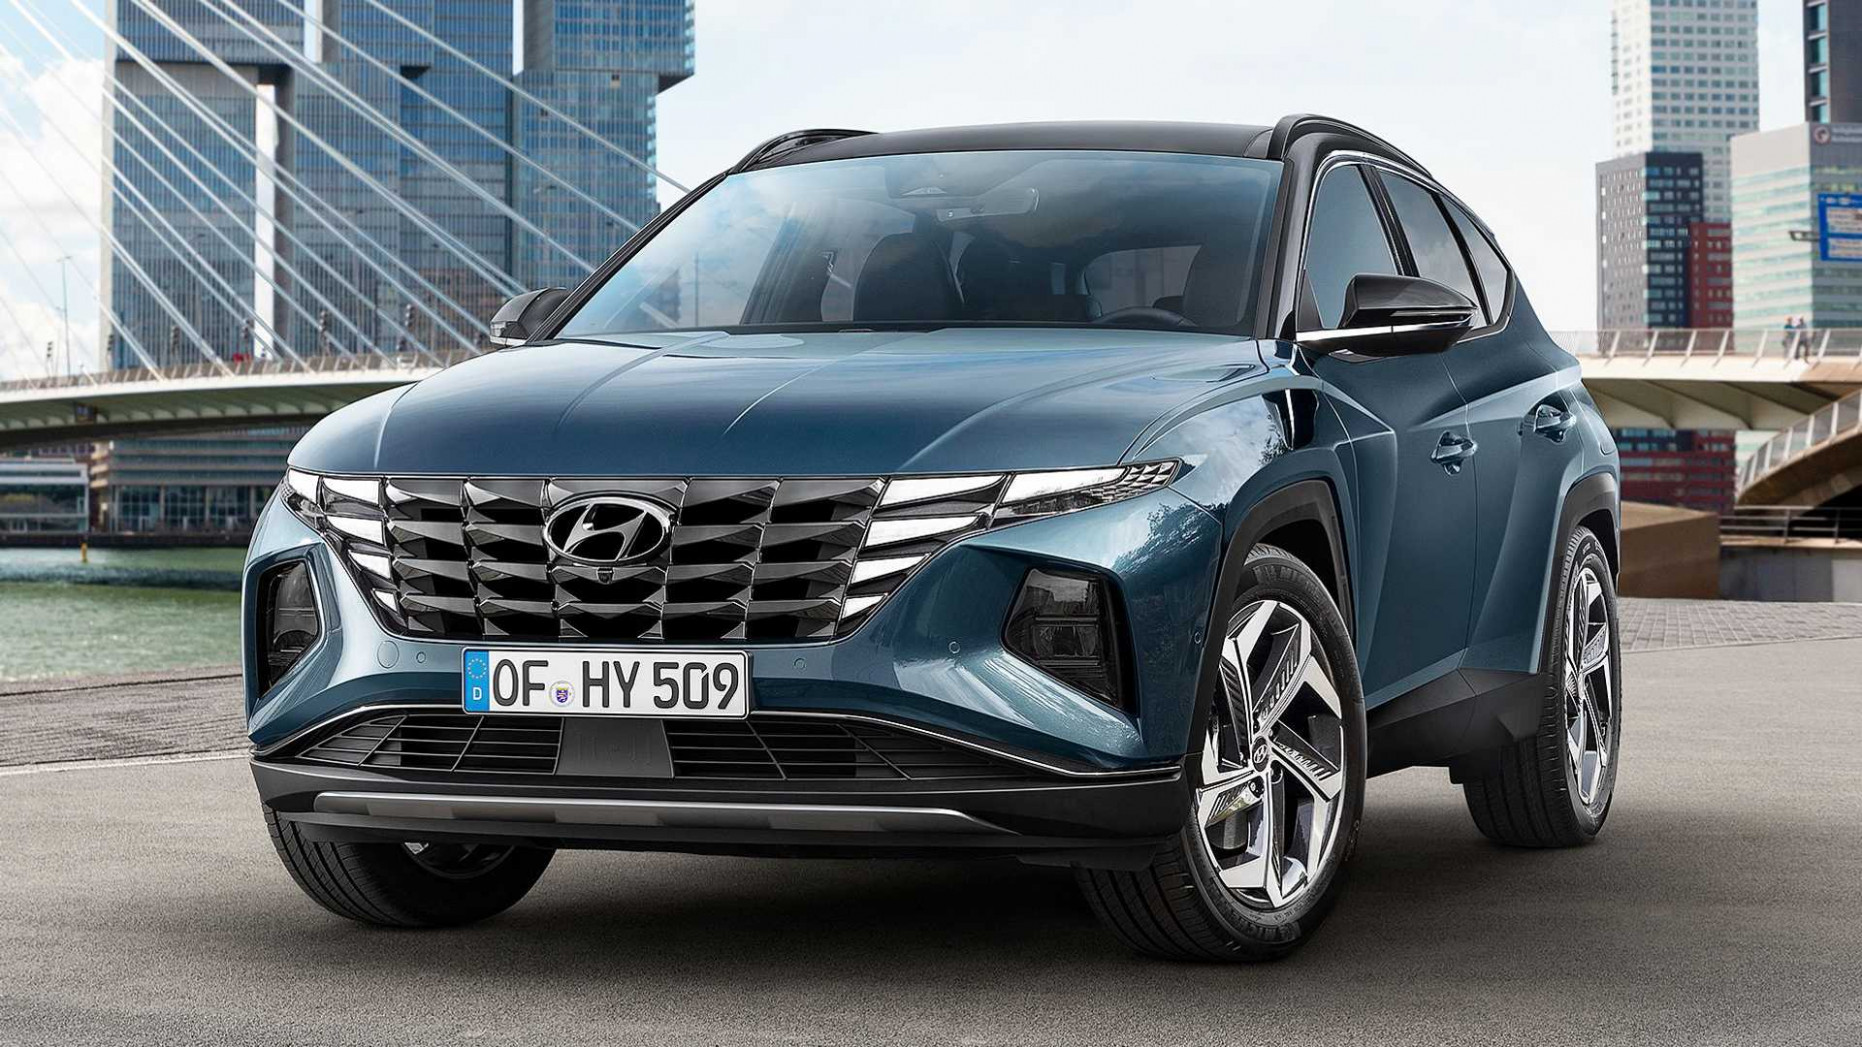 Pricing 2022 Hyundai Sonata Release Date